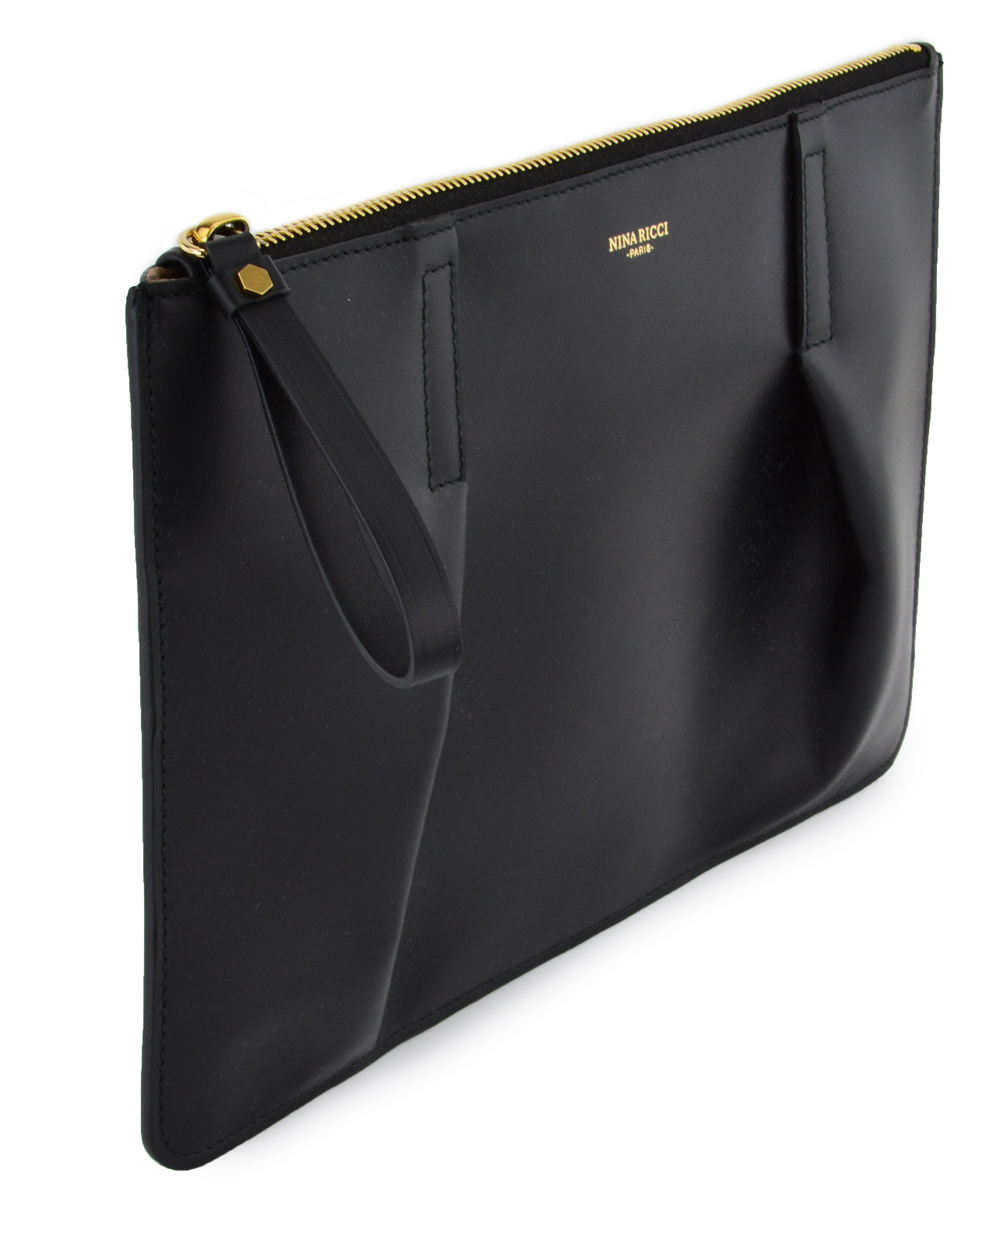 Lyst - Nina Ricci Black Large Clutch Bag in Black